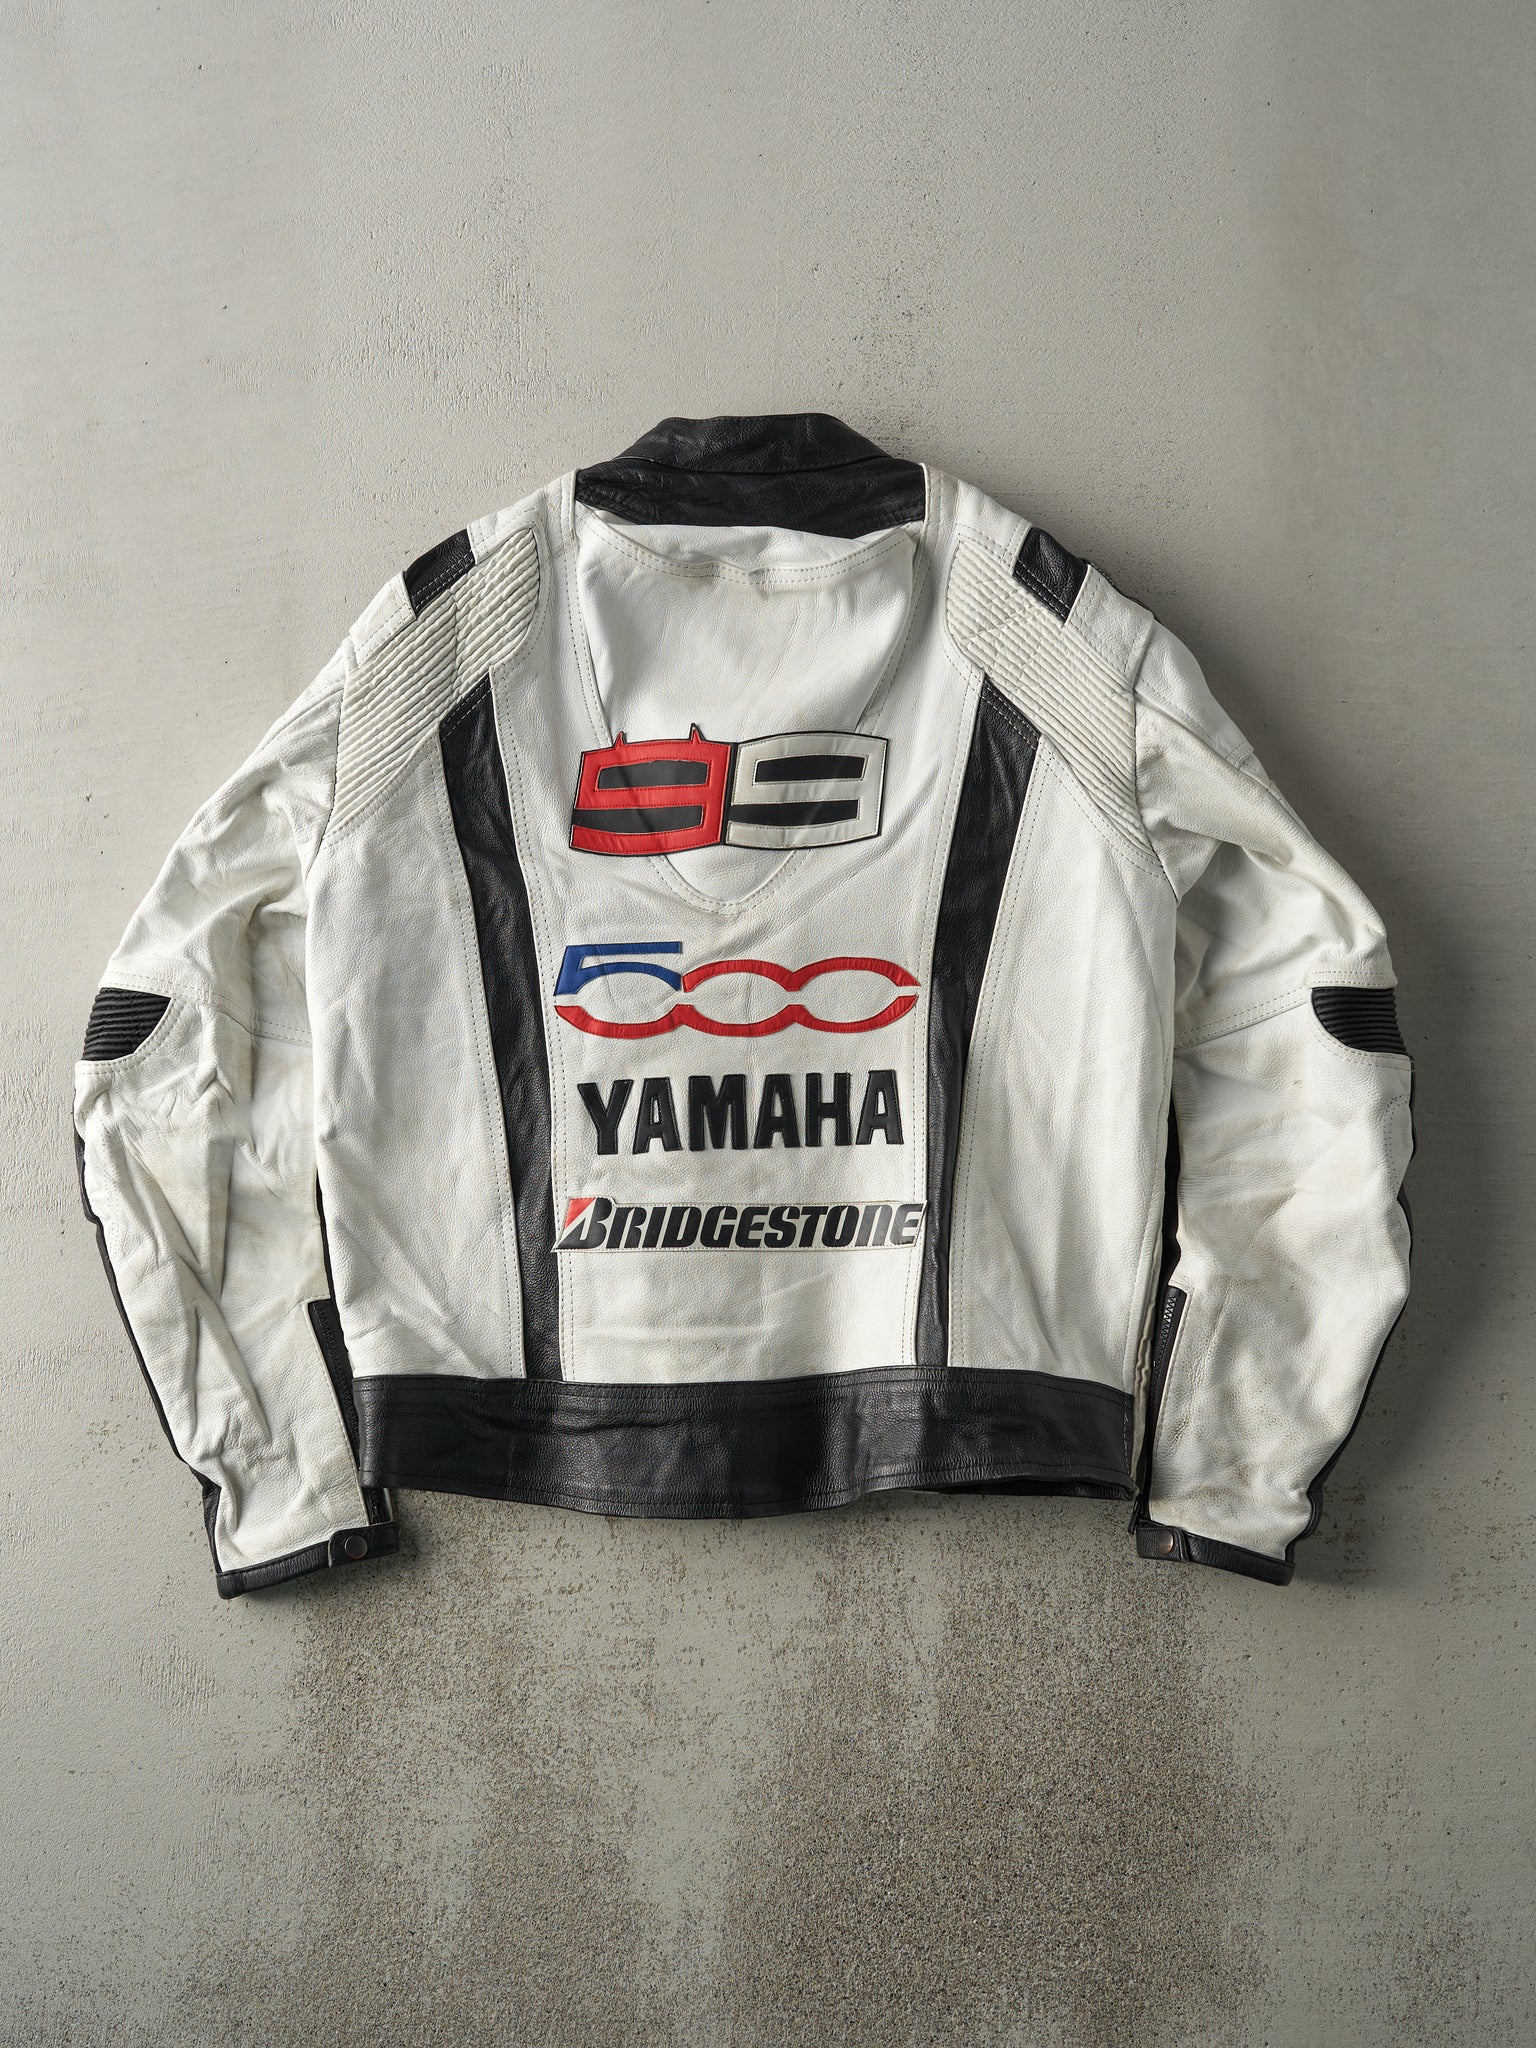 Vintage 90s White & Black Yamaha Leather Racing Biker Jacket (M)